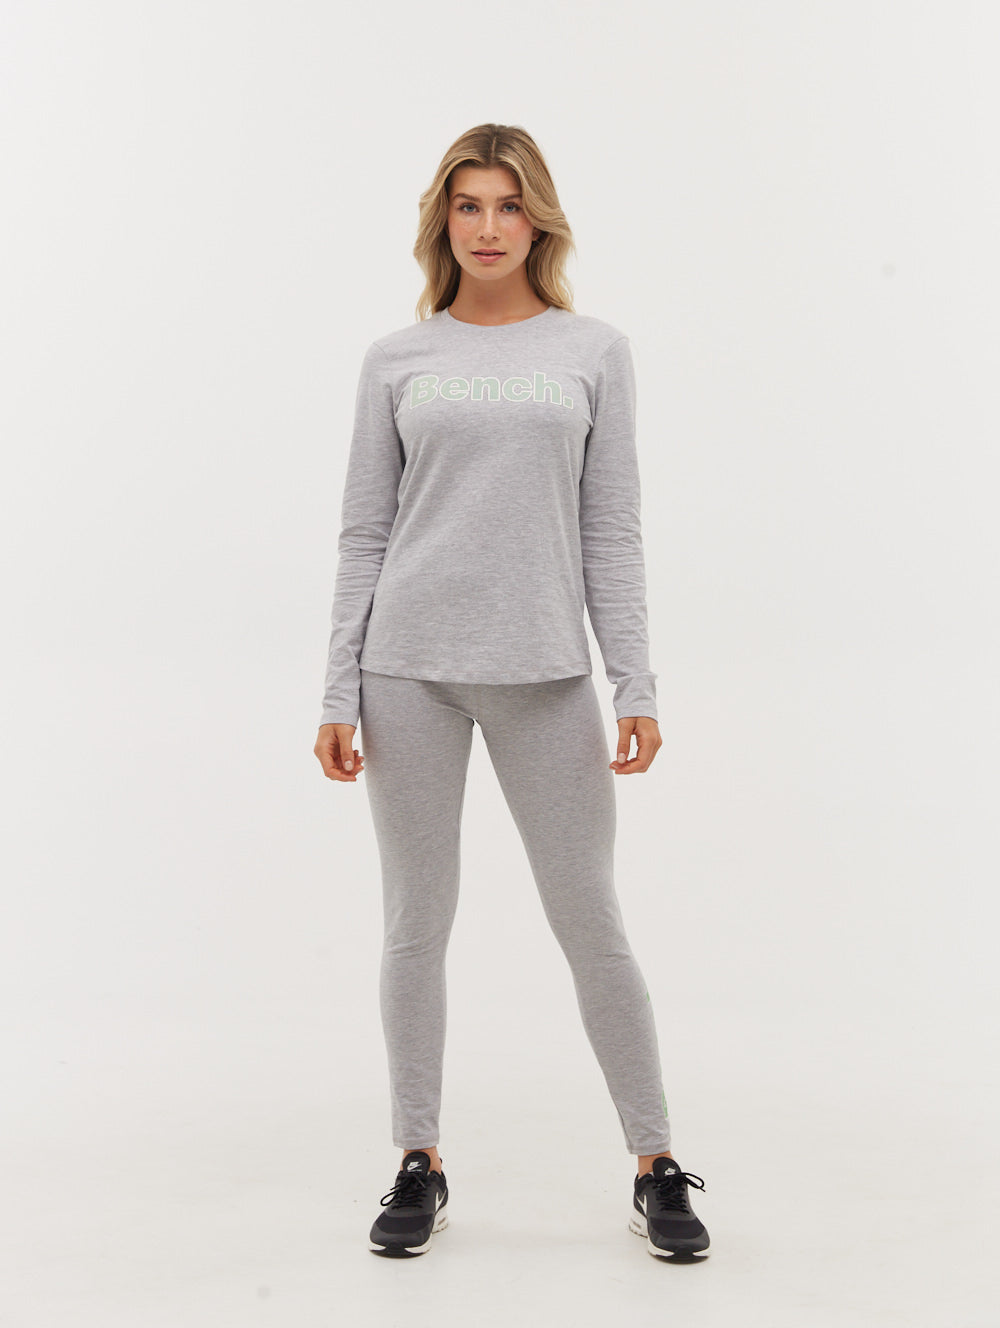 Size Large Gaiam Gray Women's Short Sleeve Shirt - Janky Gear